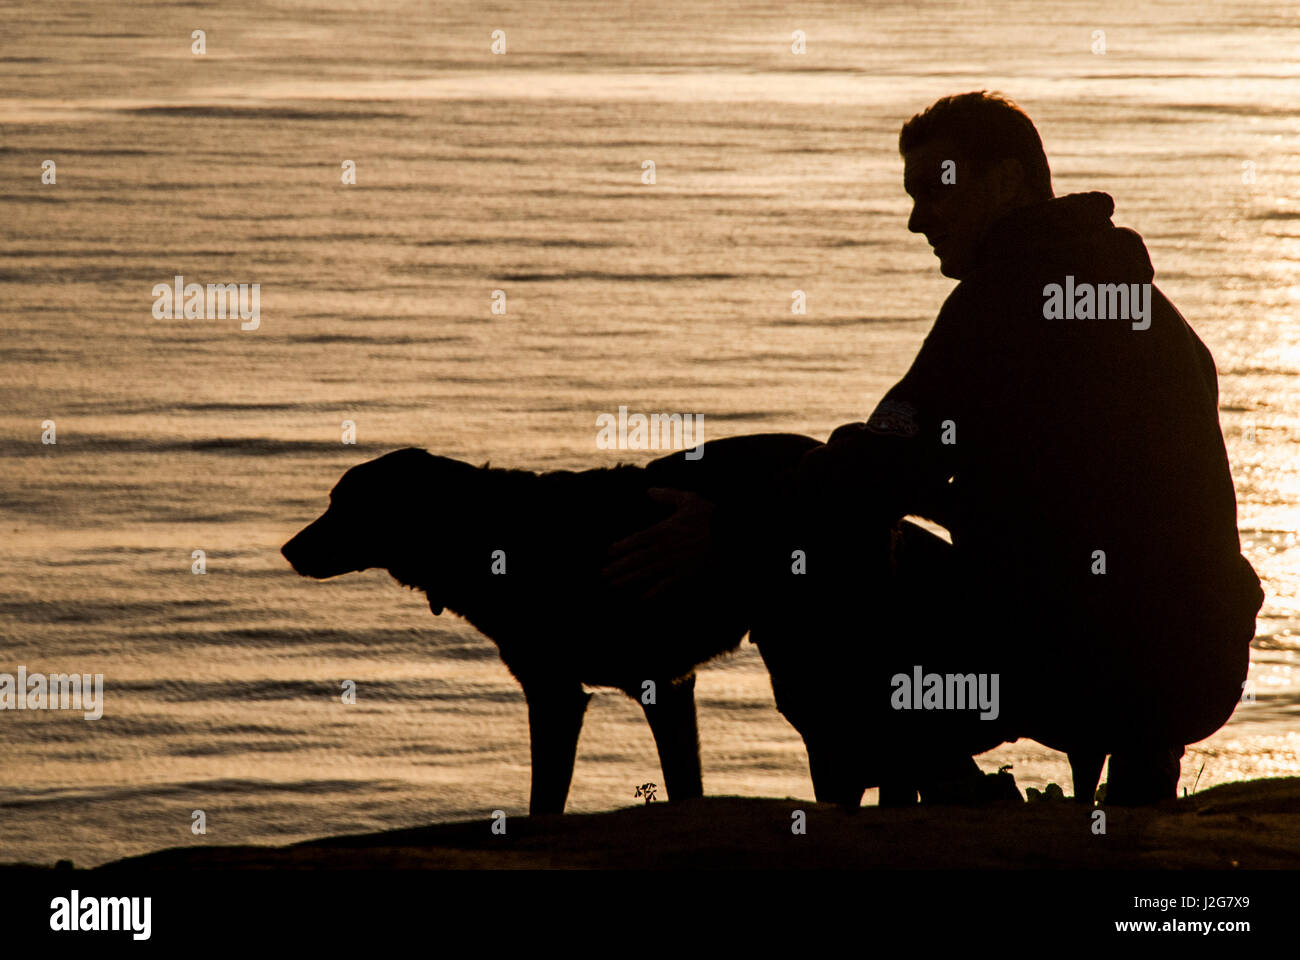 USA, California, Santa Barbara, Arroyo Burro Beach County Park, aka Douglass Preserve, sunset silhouettes of man with dog Stock Photo